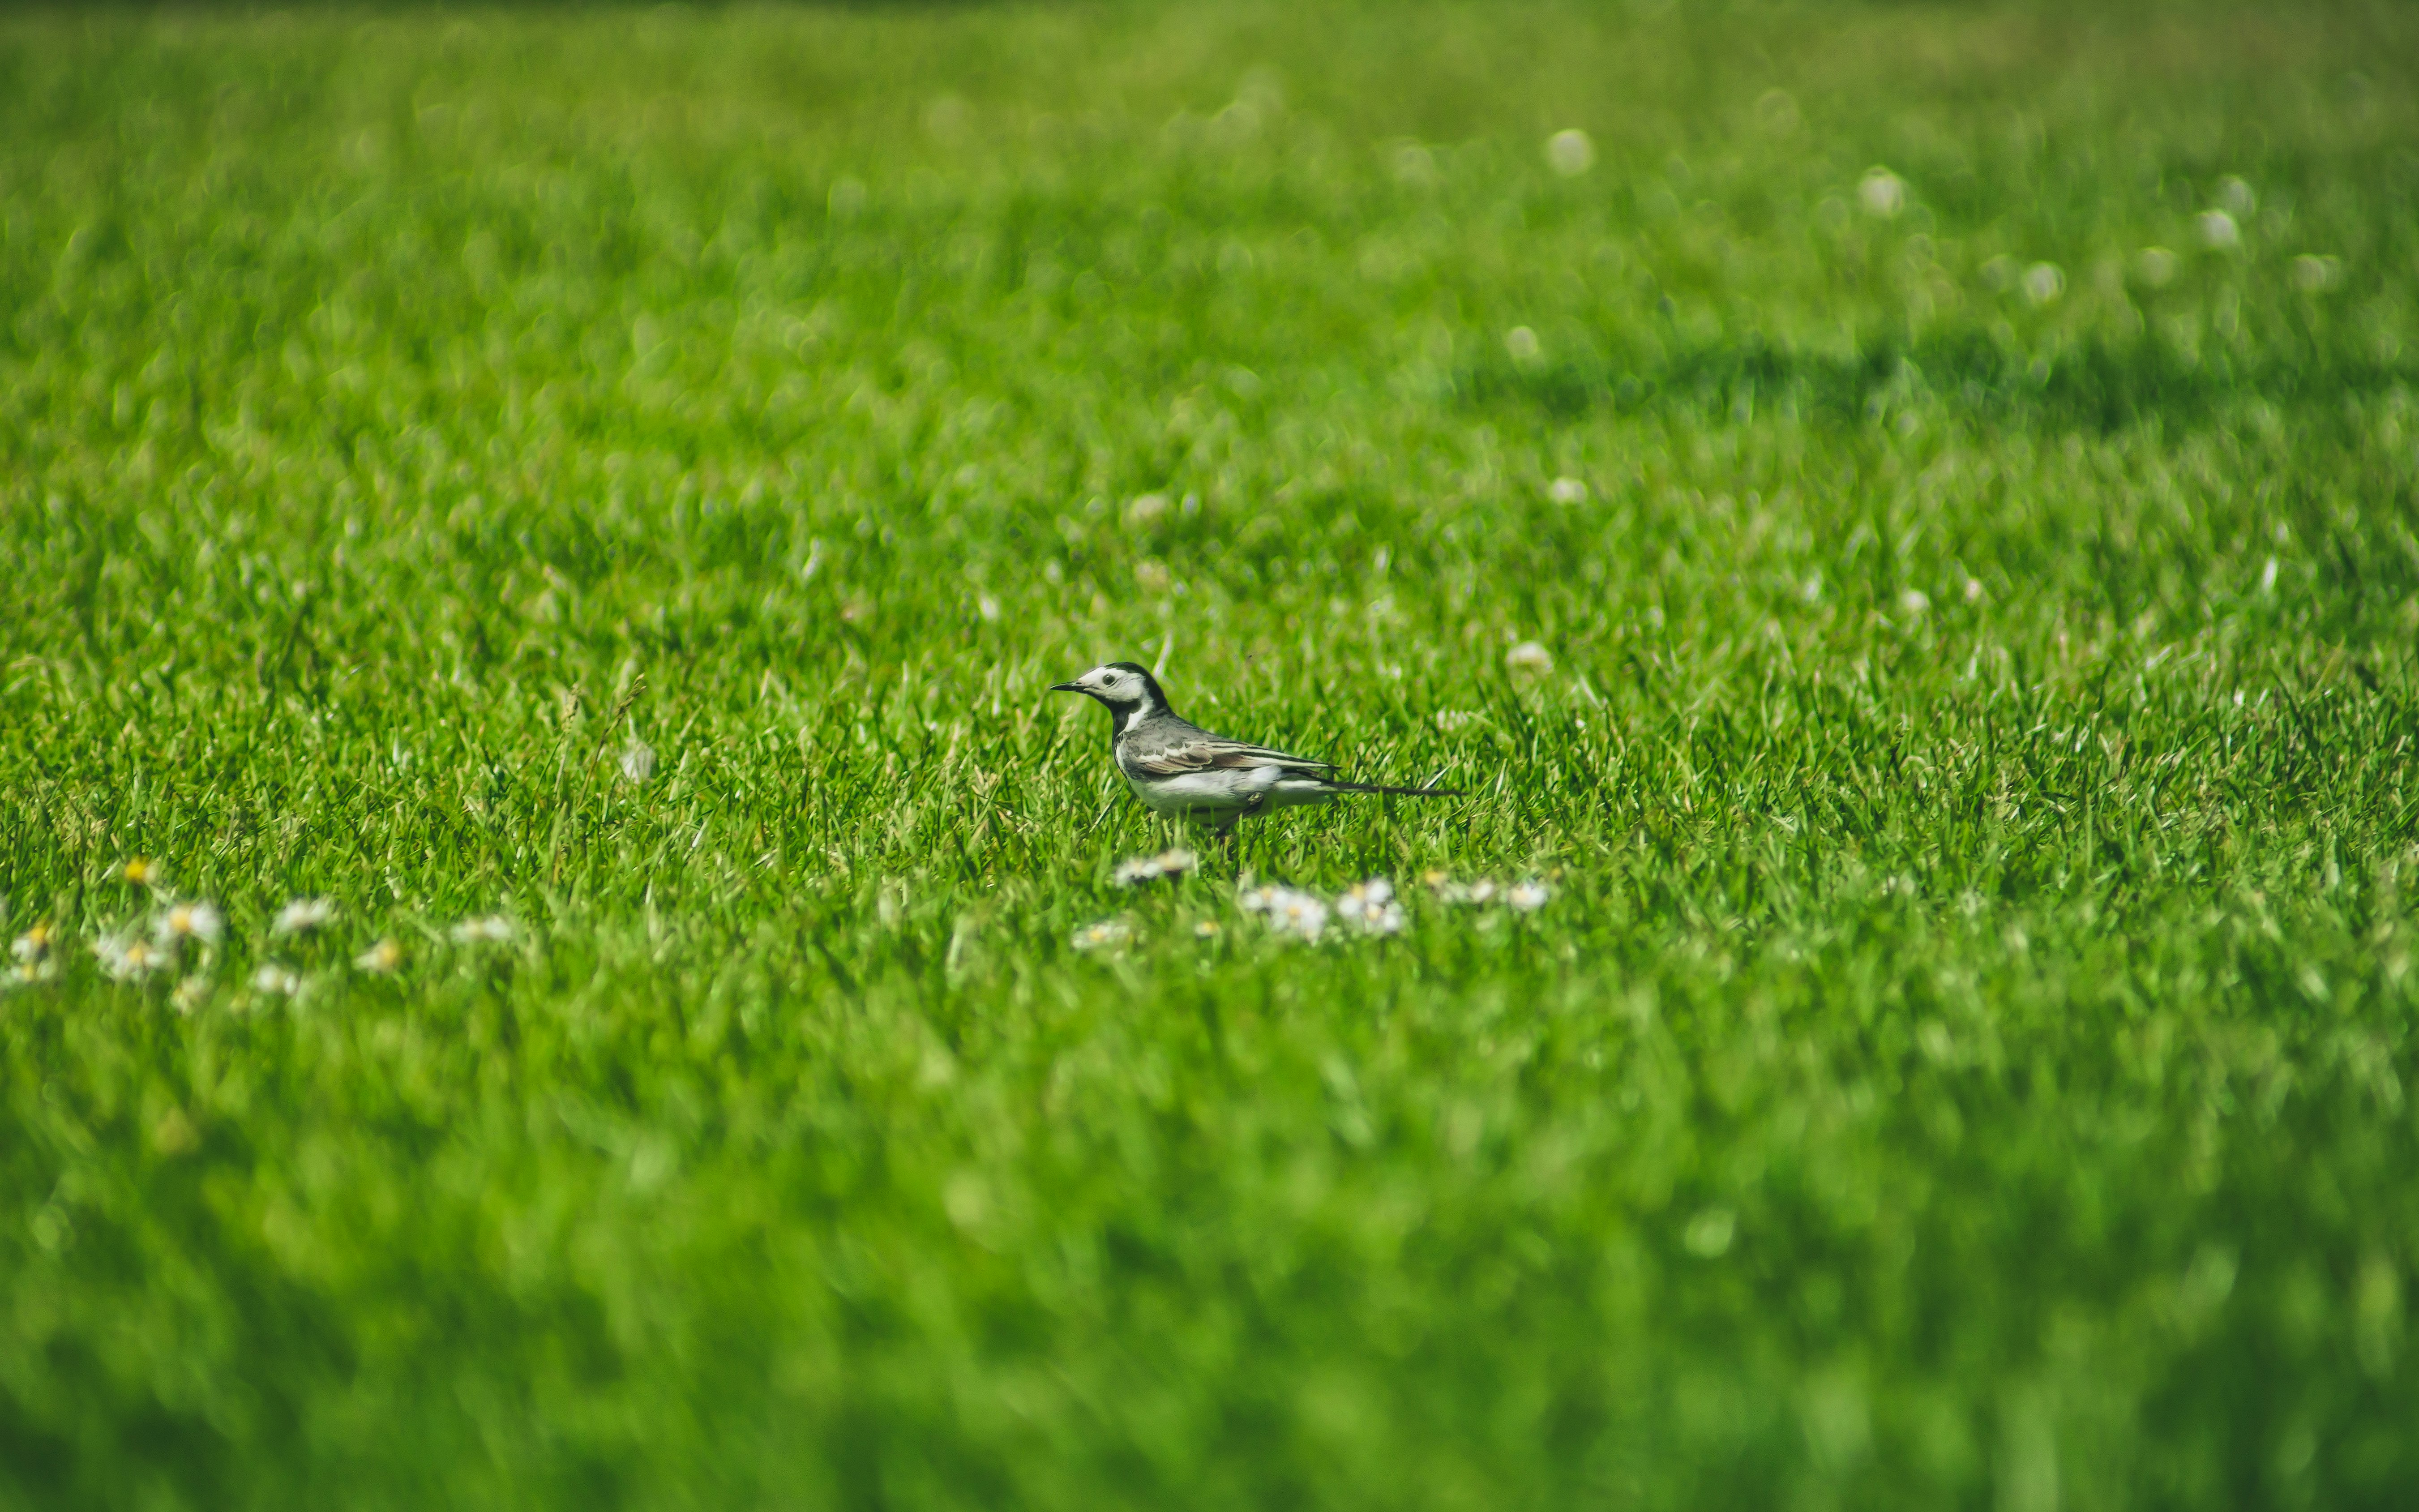 gray bird on green grass during daytime